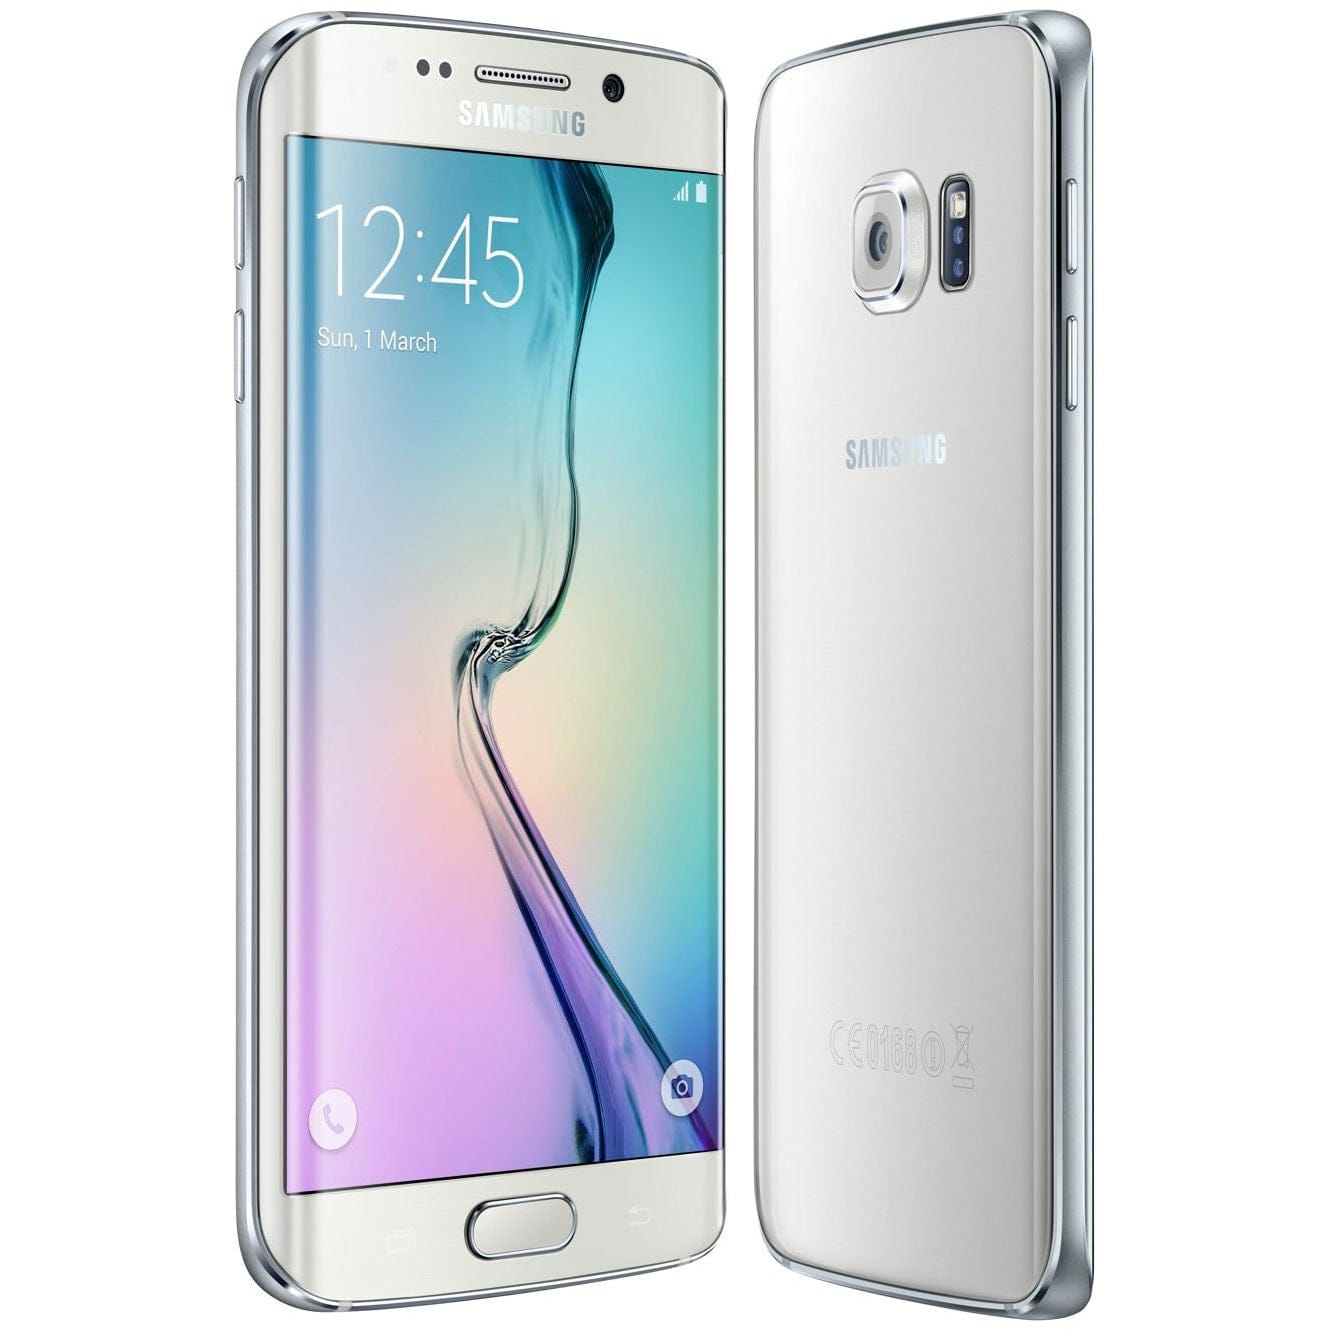 Samsung Galaxy S6 edge SMG925i - 32 GB - White Pearl - Unlocked